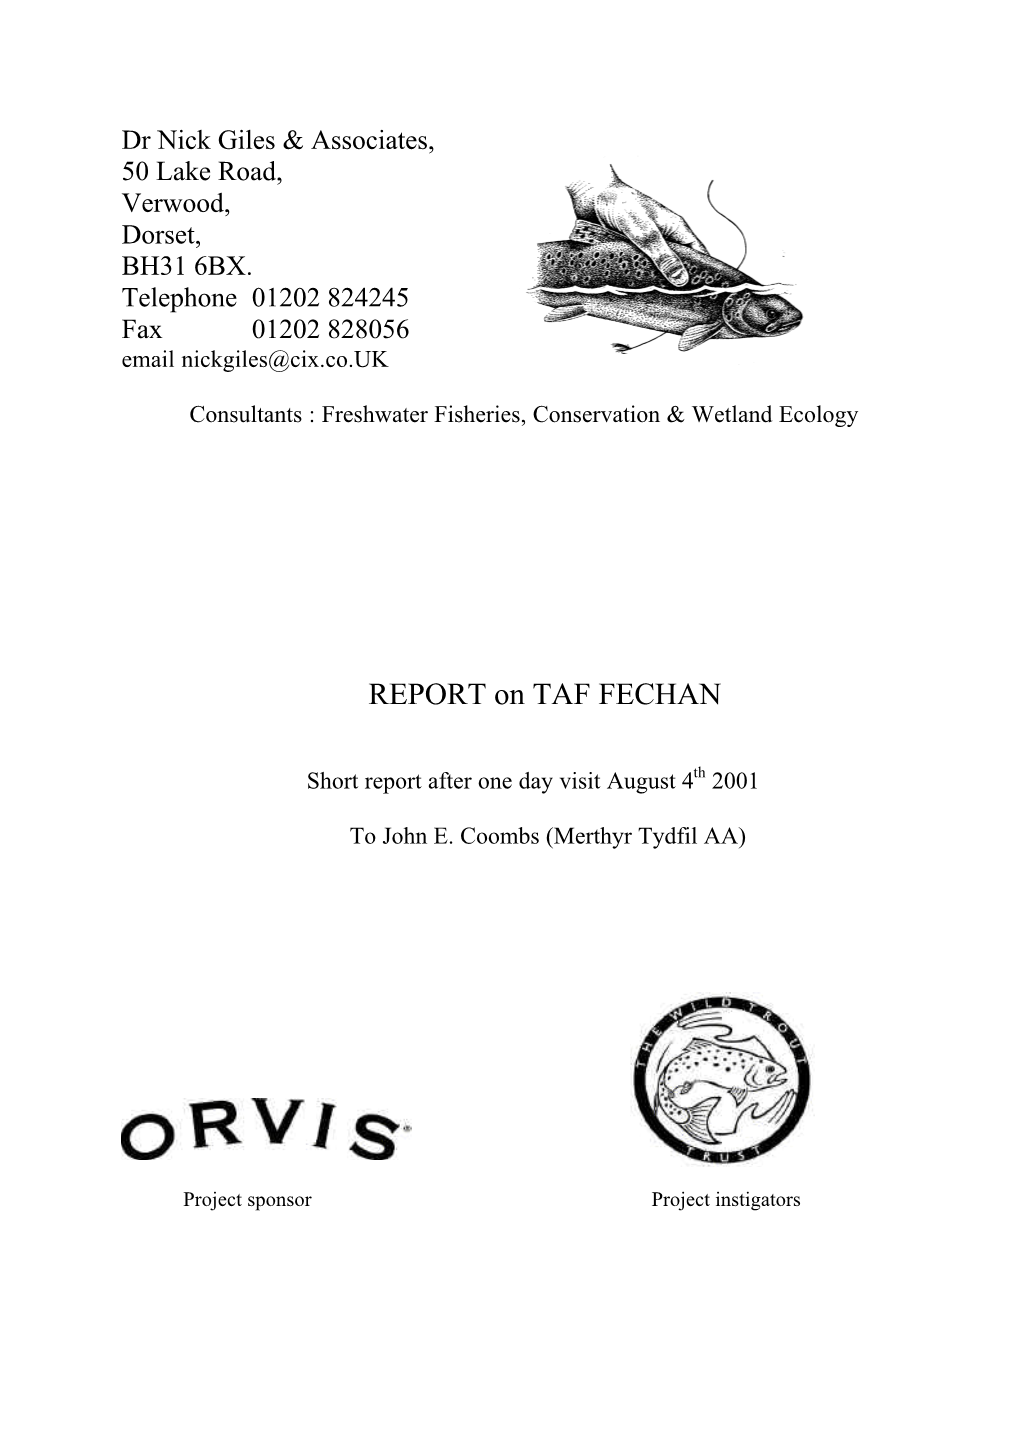 REPORT on TAF FECHAN